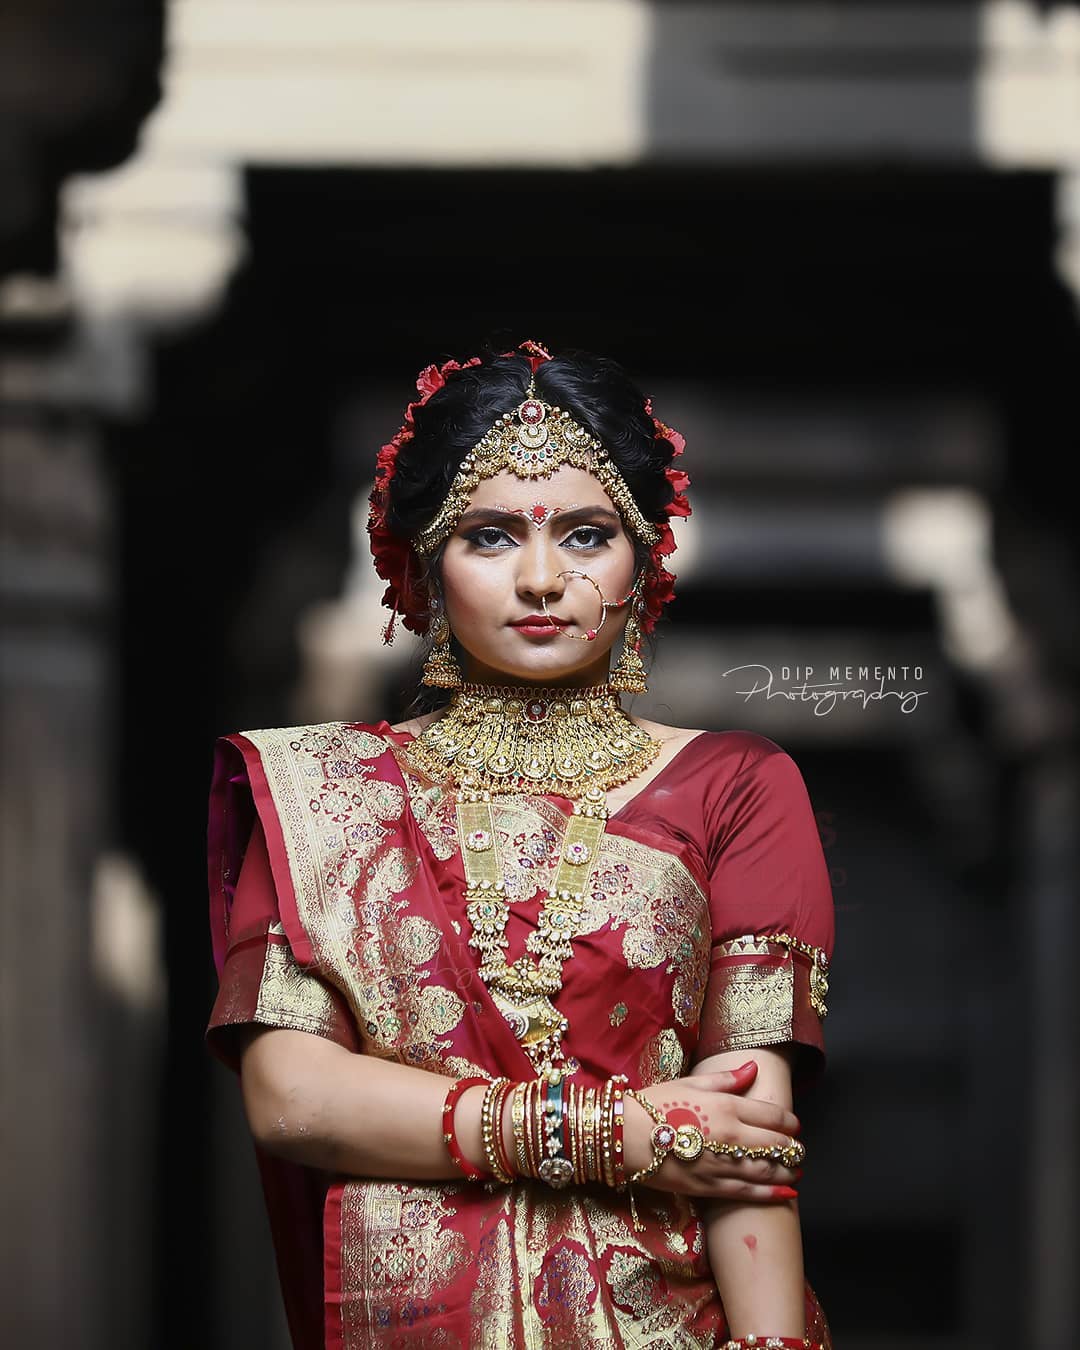 Feel the Untold...
.
.
Bengali Bride Makeup and Concept Shoot
.

MUA @dishabeautysaloonacademynikol 
Model @meera_daxini 
Photography: @dip_memento_photography
@memento_photography @meandmyphotography11 .
. #ahmedabad #photography#bridalmakeup #makeup #artist #dressyourfacelive #indianwedding #weddingevent #weddingmakeup #weddingmakeover #weddingbells #weddingbrigade #weddingwire #weddingfashion #instawedding #indianbride #brideswag #weddinghairstyle #bridephotography #weddingphotography #hotbride #bridemakeup #bridehairstyle #bridemakeover #indiandulhan #instagram #instalove #instabride #brideoftheday #followus